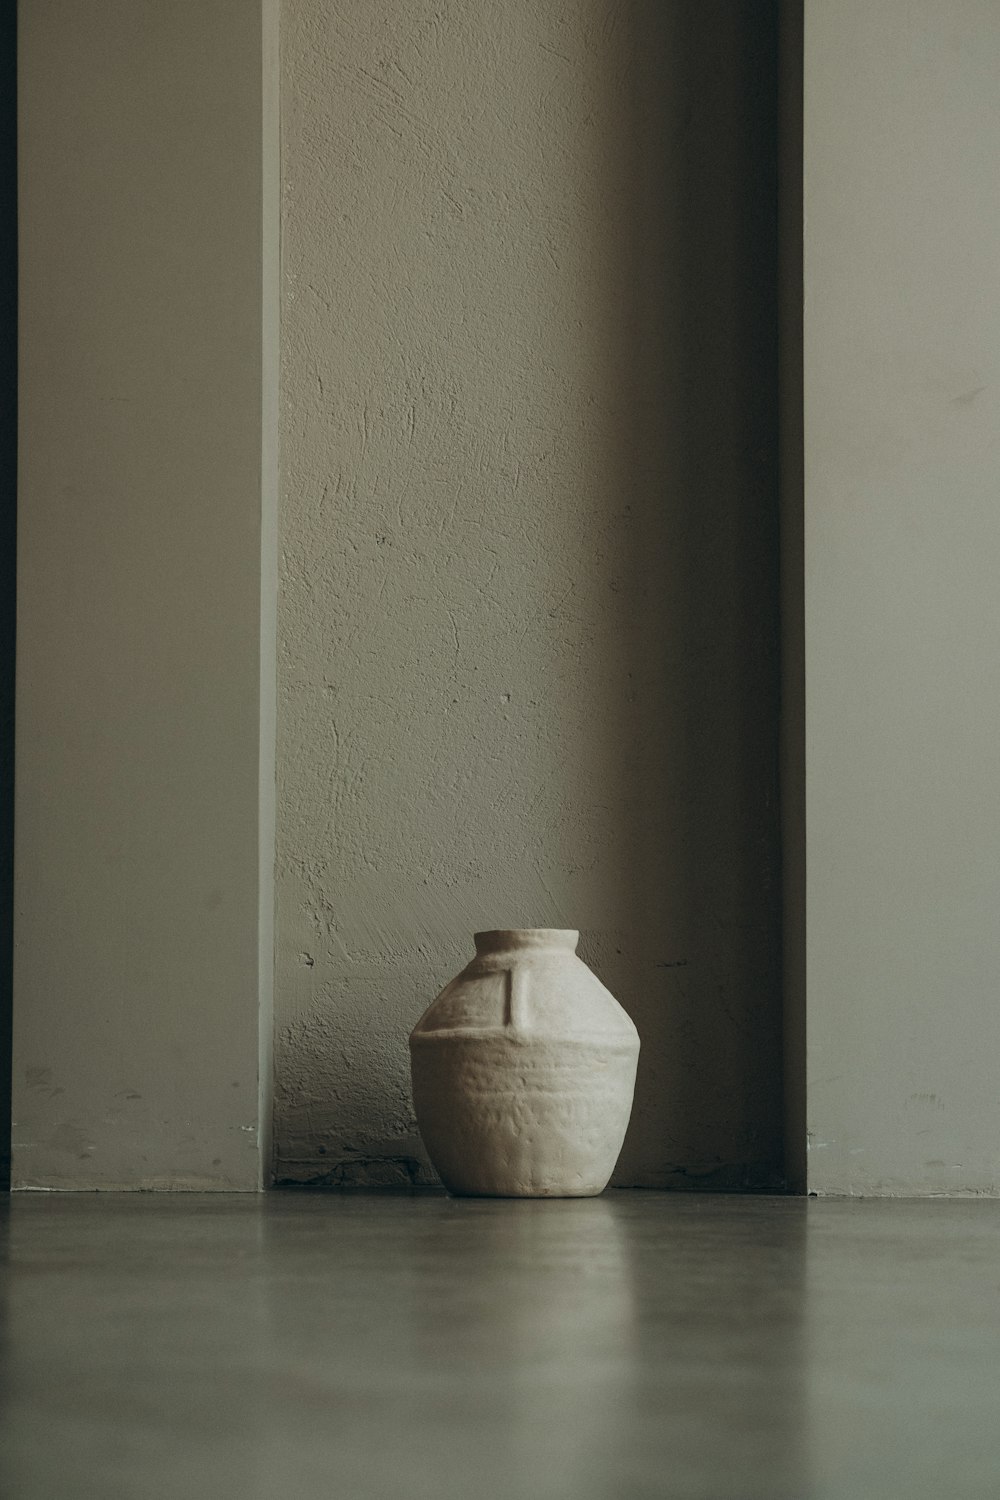 white ceramic vase on gray concrete floor